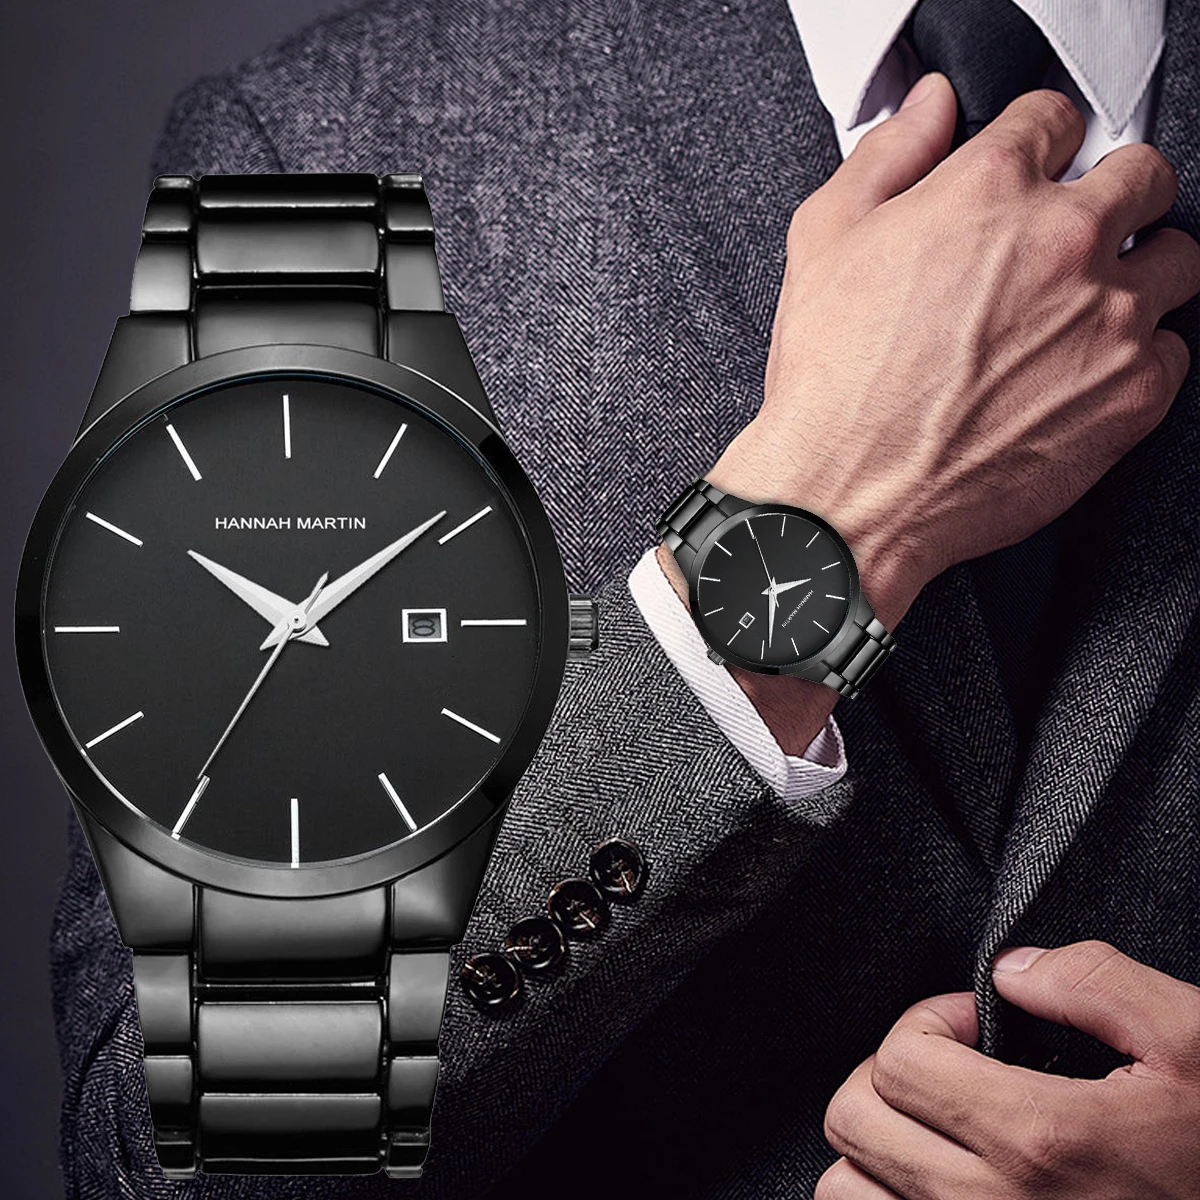 Men Watch Top Brand Luxury Calendar Stainless Steel Quartz Fashion Business Full Black Waterproof Watches Relogio Masculino